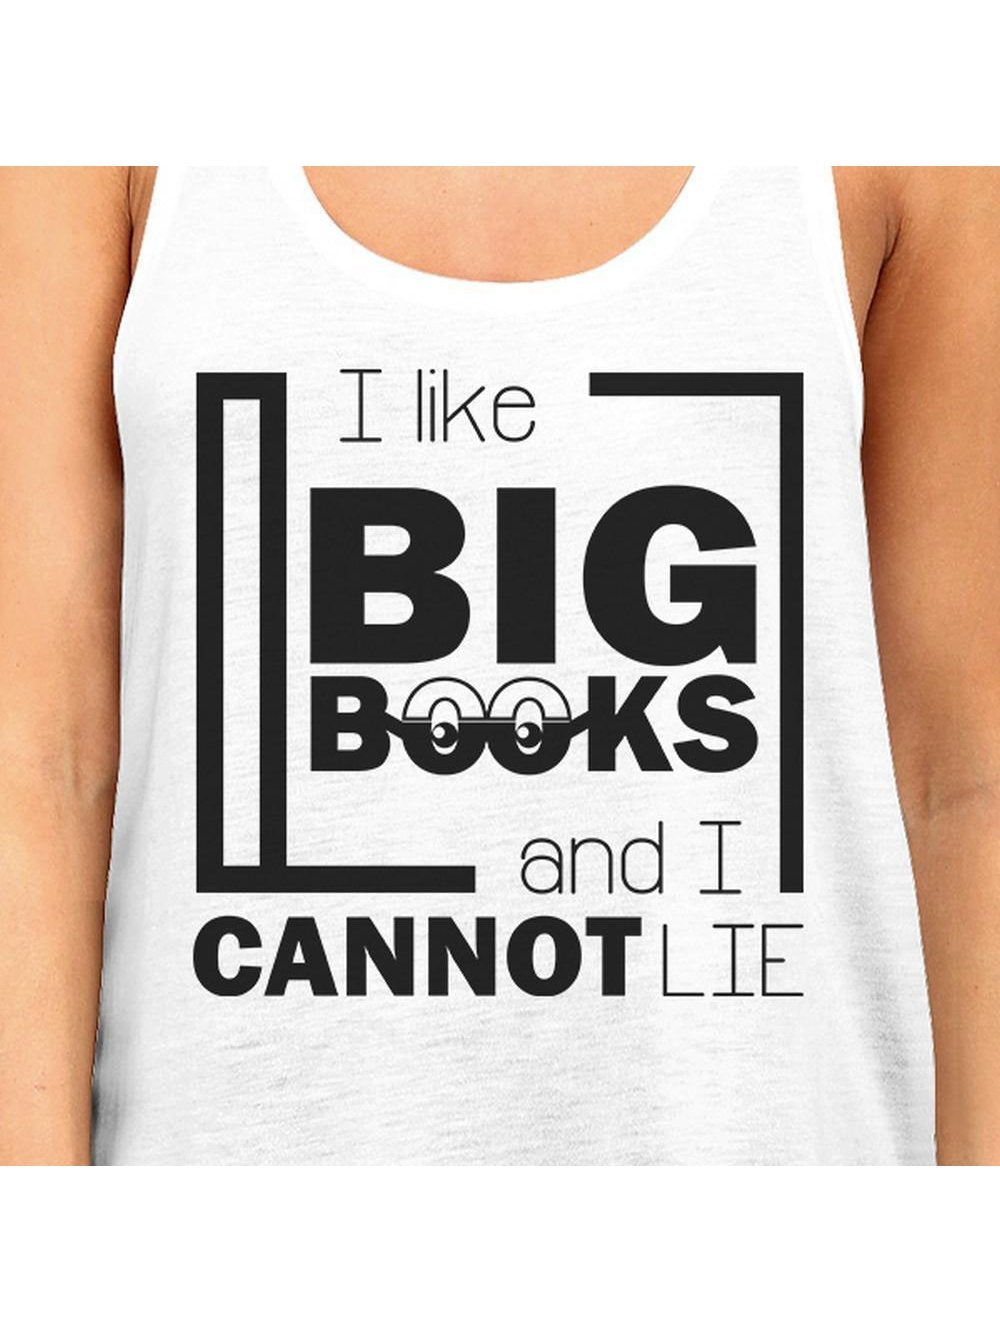 I Like Big Books Cannot Lie, Women's White Tank Top, S-2XL - Tuma's Books